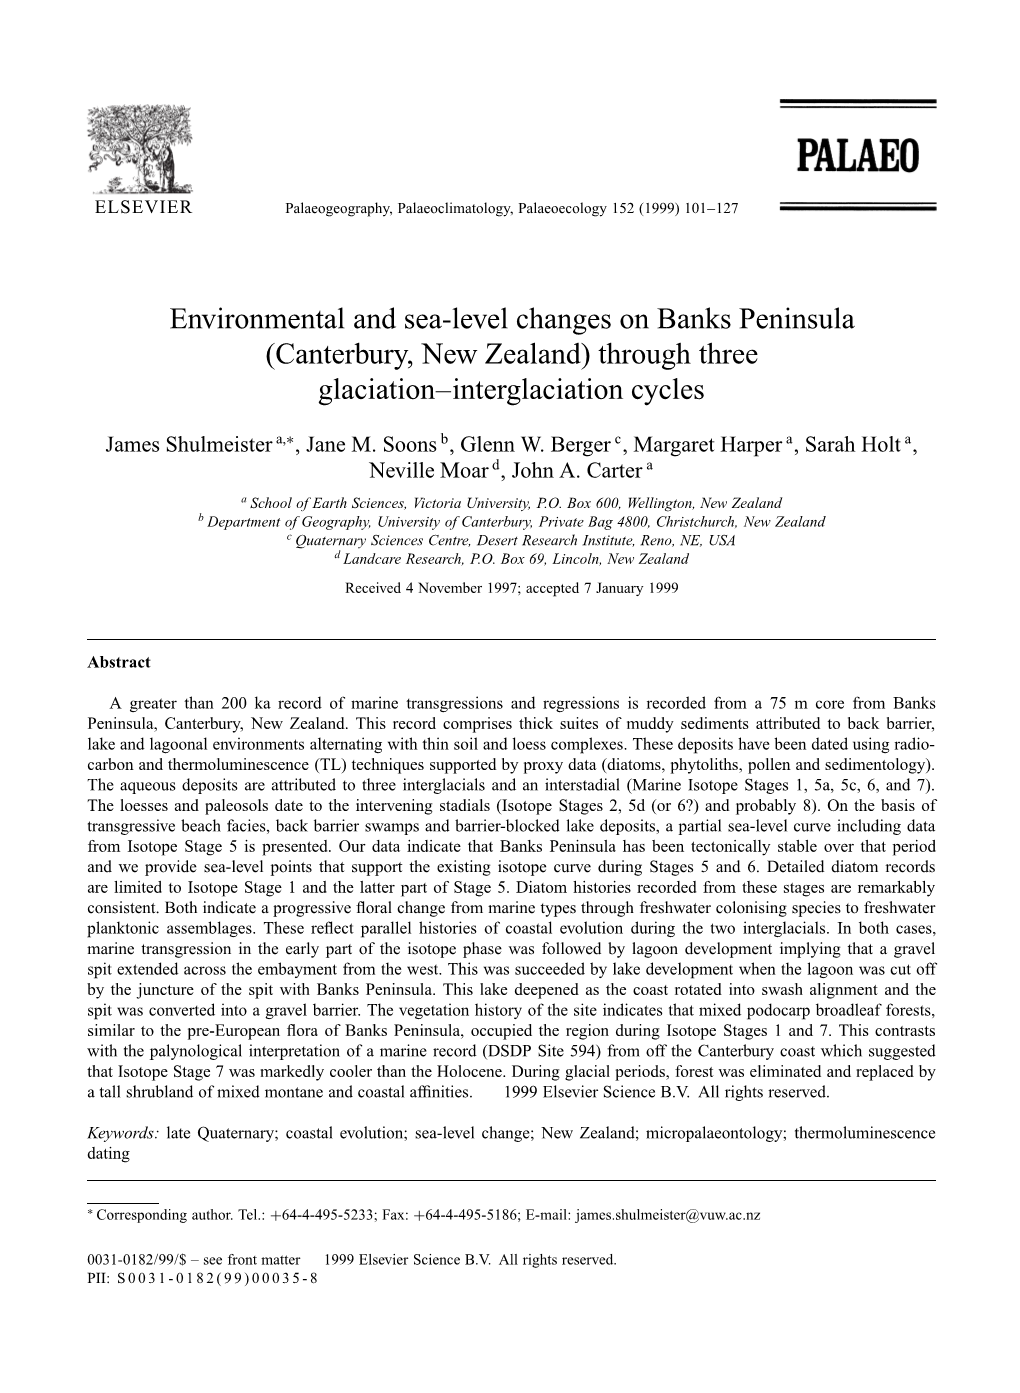 Environmental and Sea-Level Changes on Banks Peninsula (Canterbury, New Zealand) Through Three Glaciation±Interglaciation Cycles